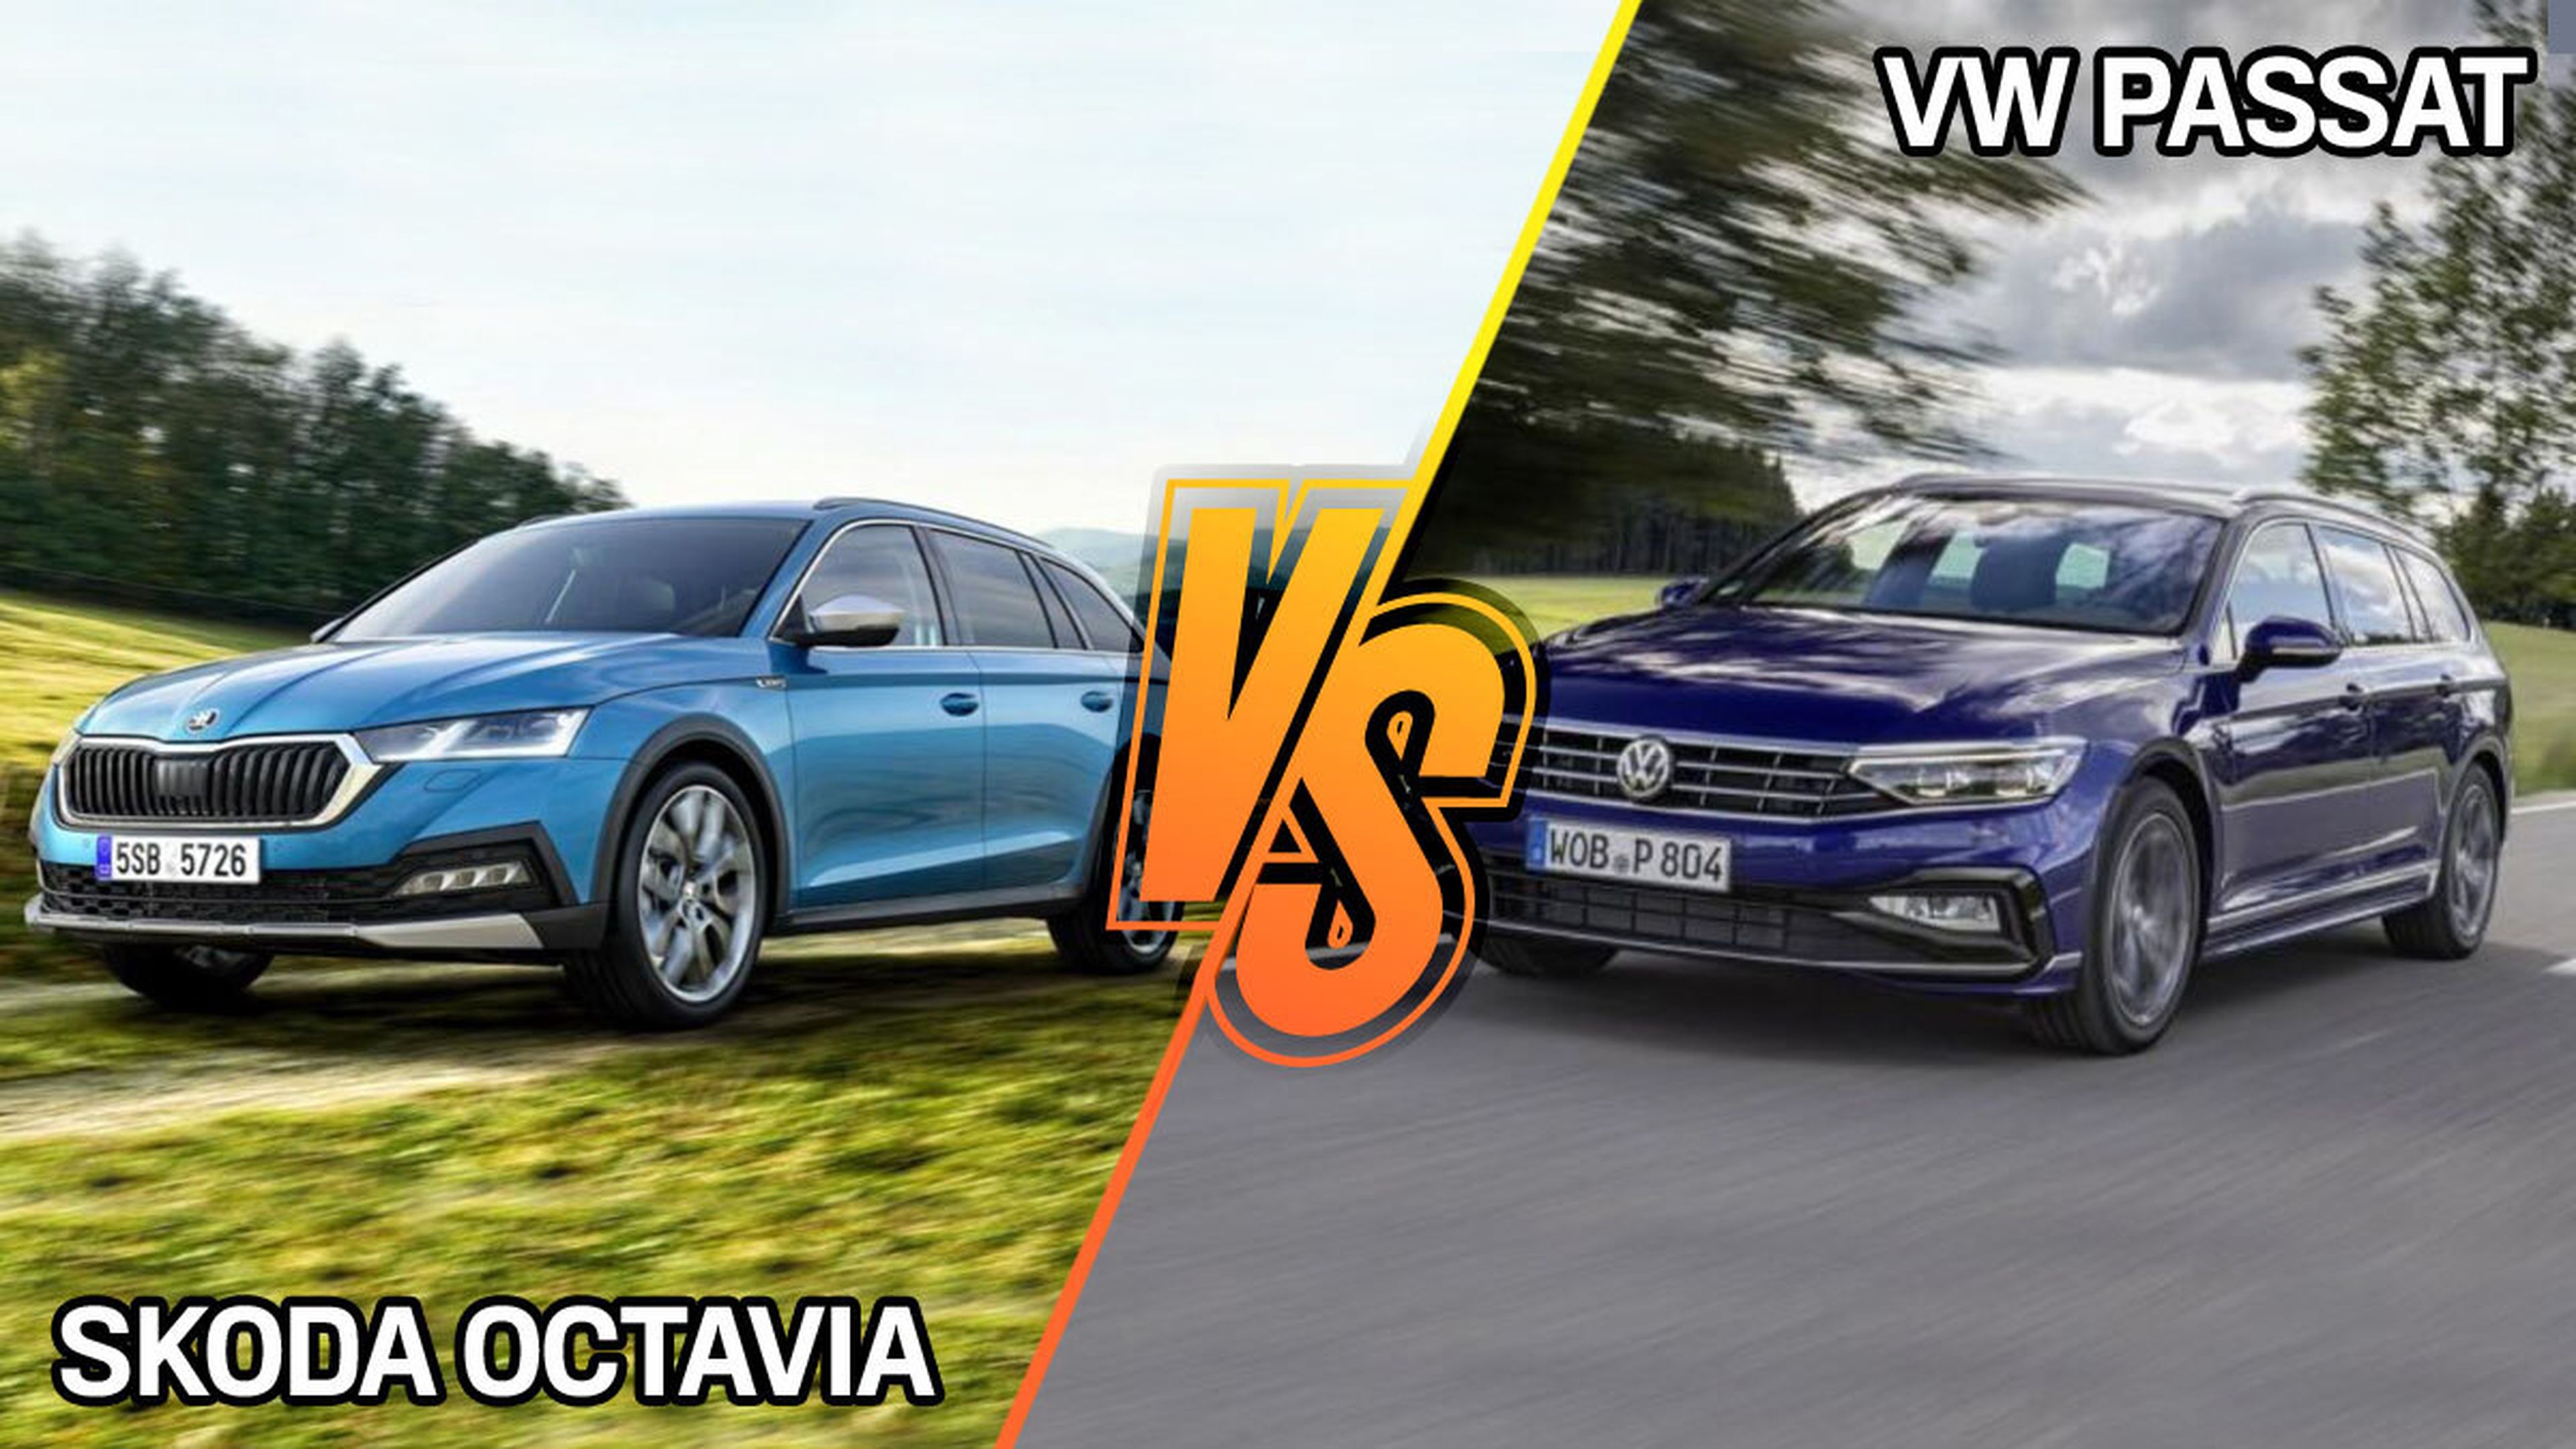 VW Passat o Skoda Octavia, ¿cuál es mejor familiar?